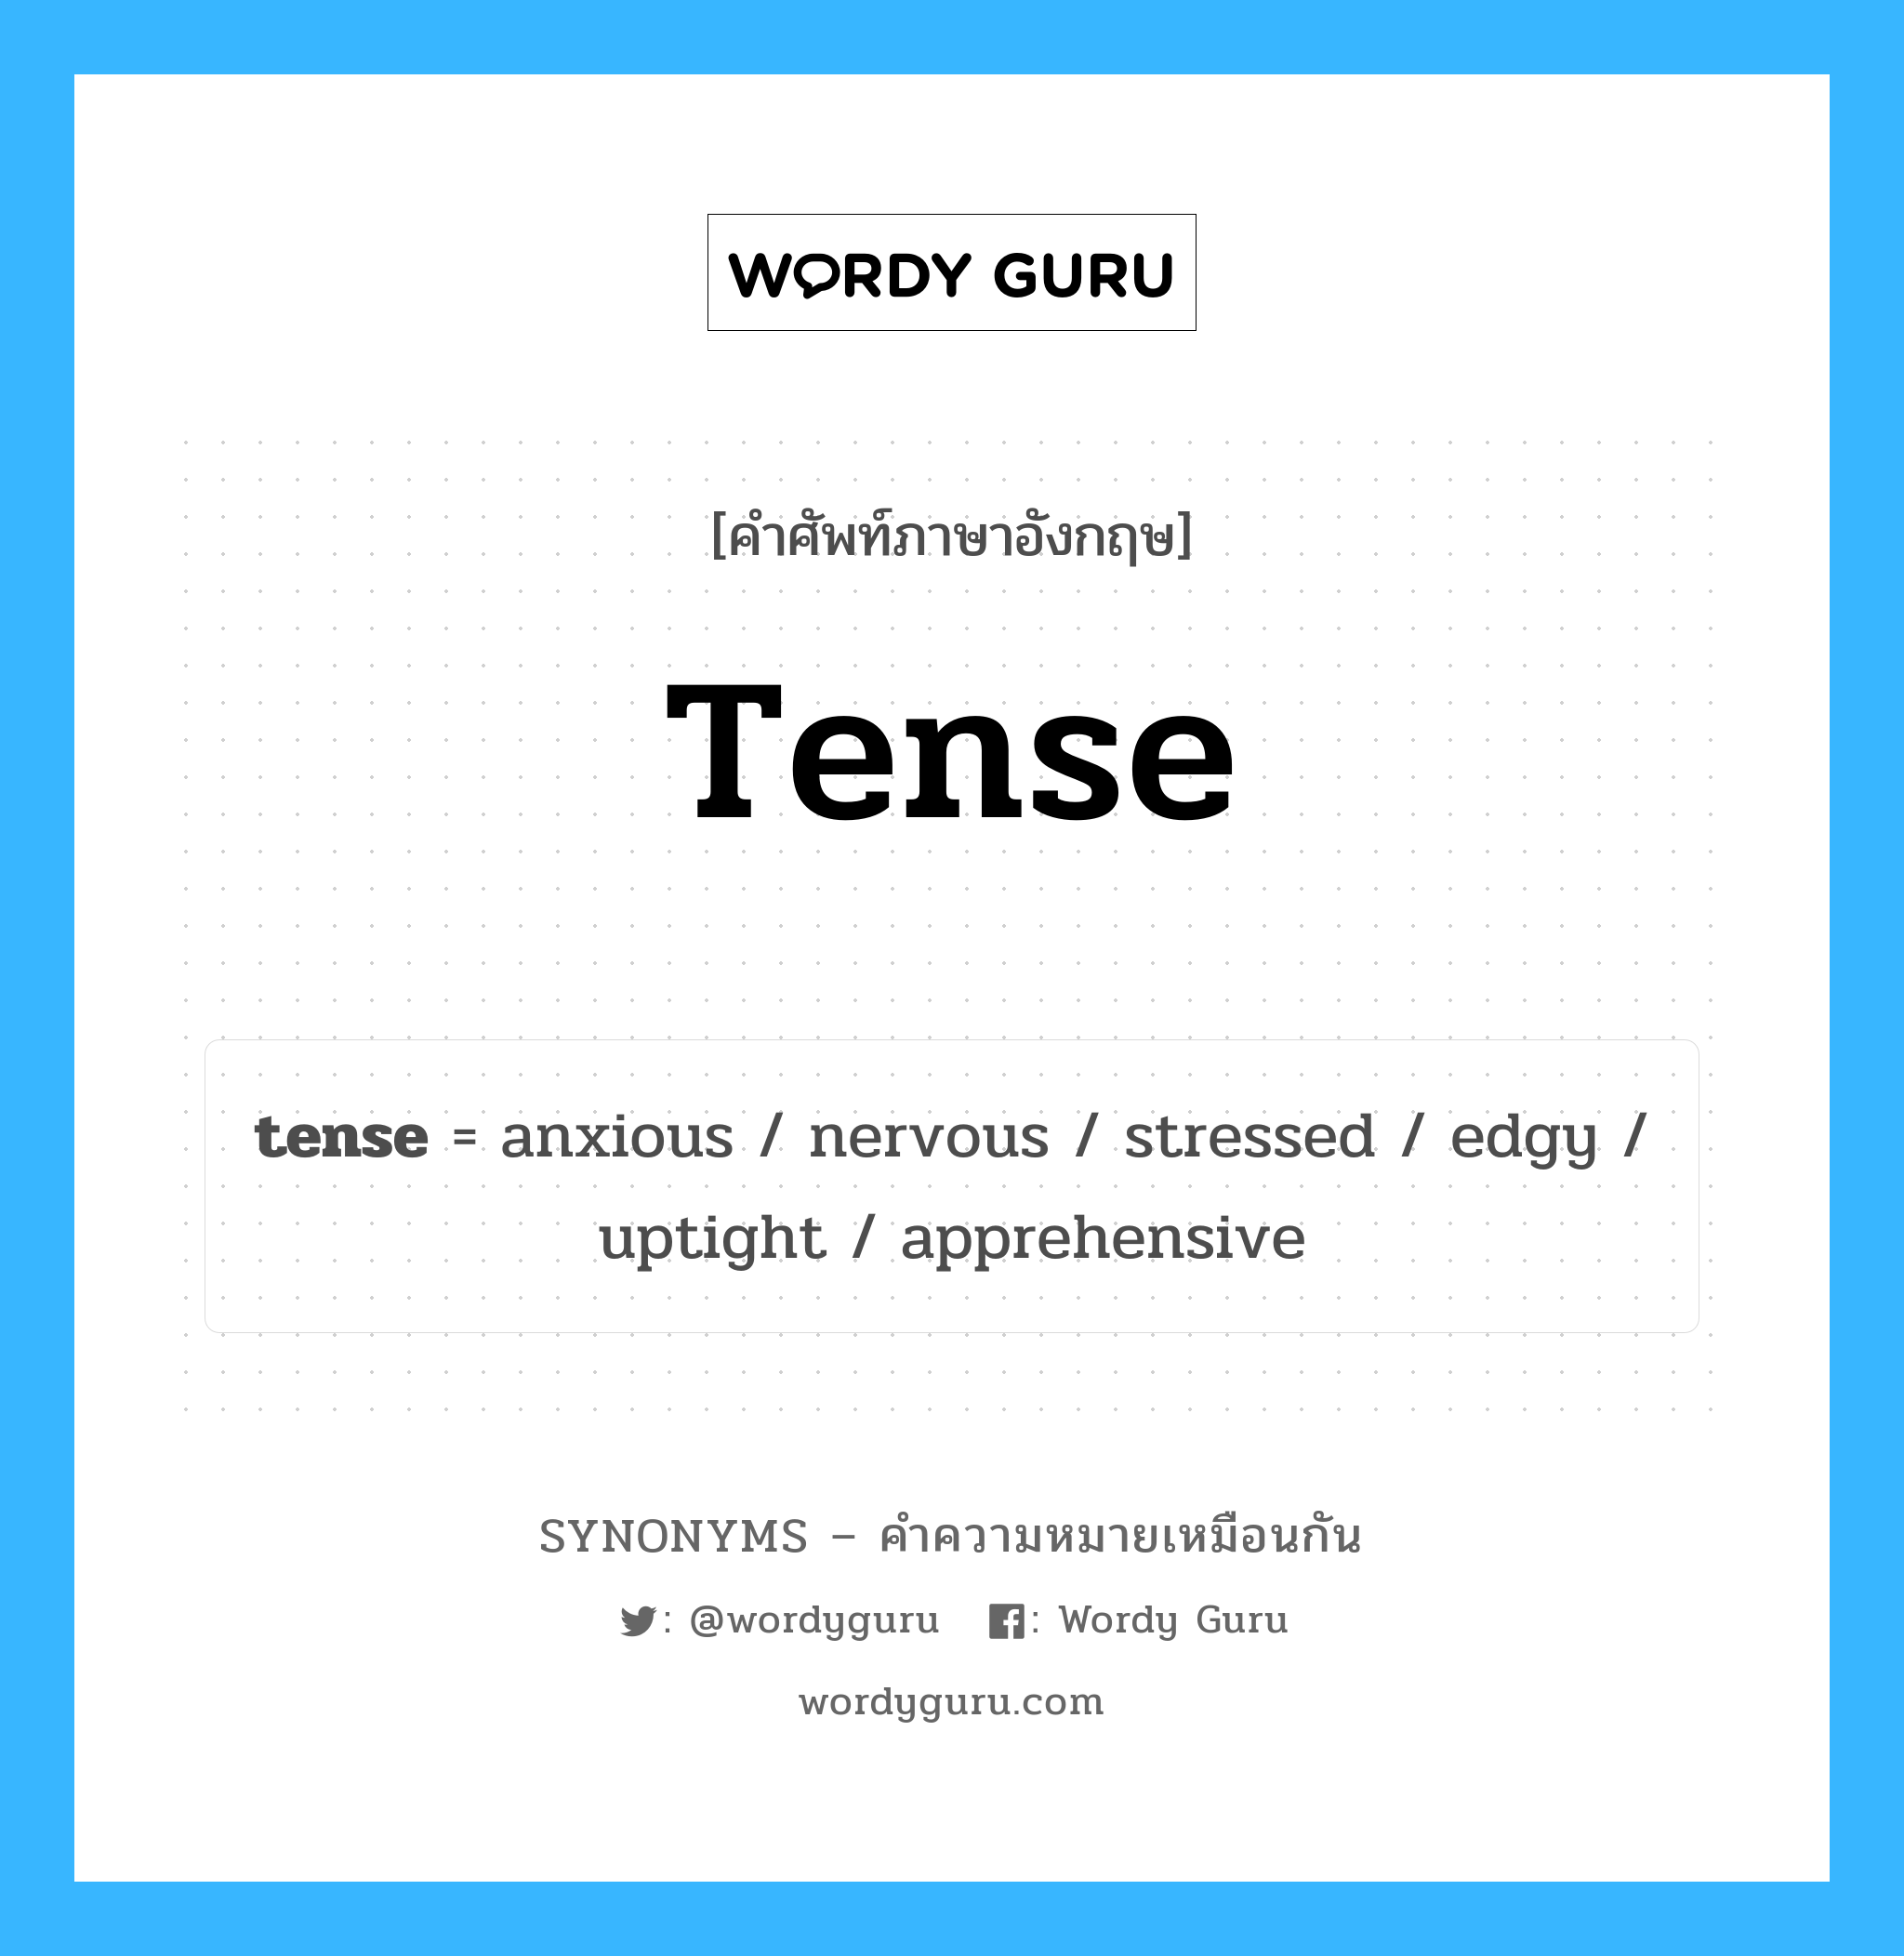 nervous เป็นหนึ่งใน tense และมีคำอื่น ๆ อีกดังนี้, คำศัพท์ภาษาอังกฤษ nervous ความหมายคล้ายกันกับ tense แปลว่า ประสาท หมวด tense